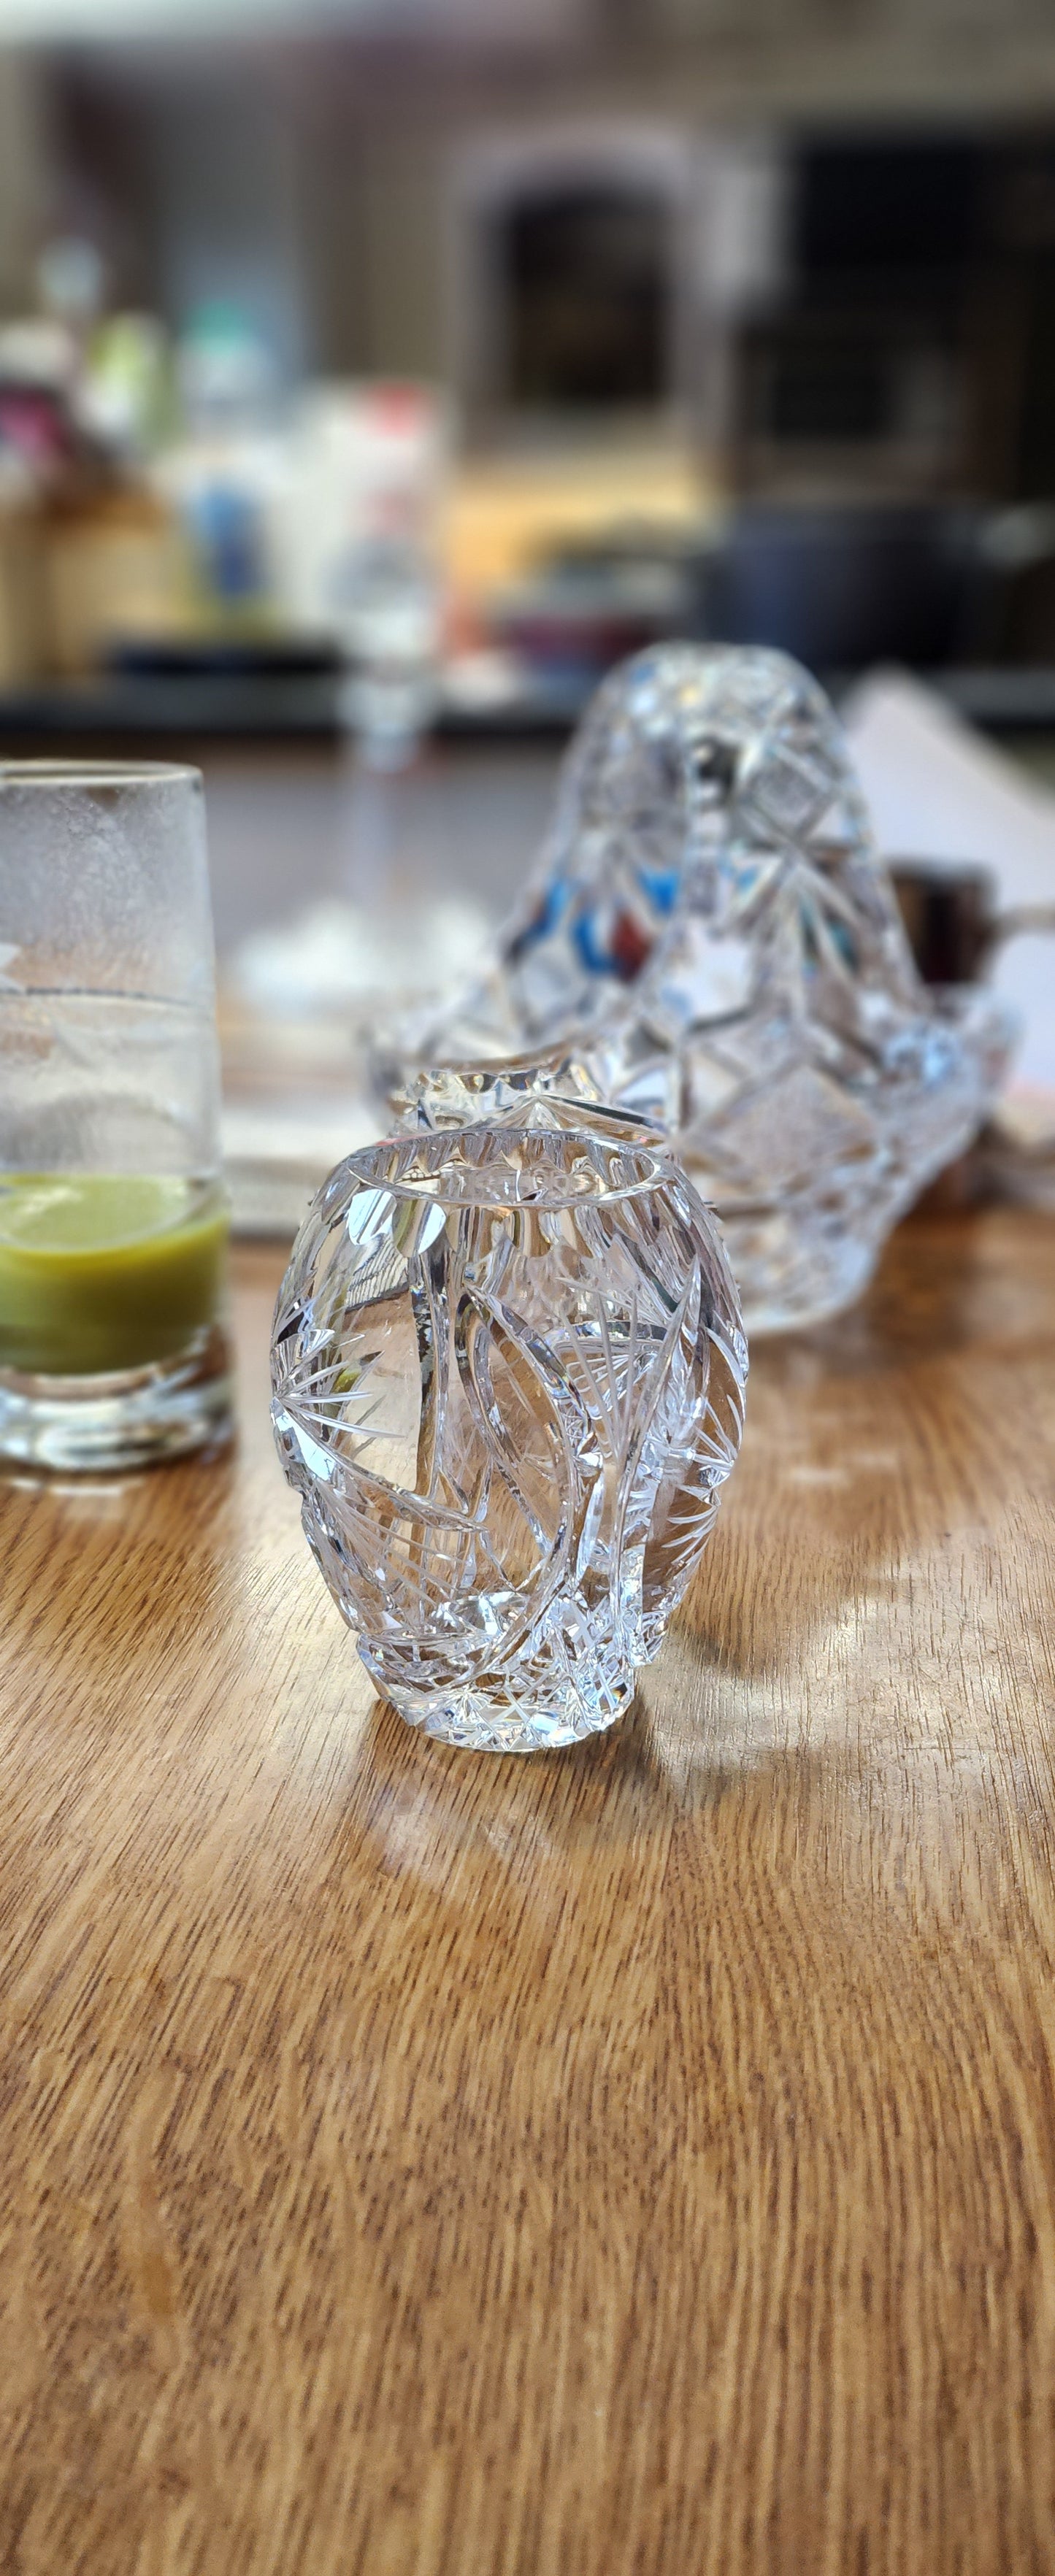 Waterford high quality crystal vase h 11cm